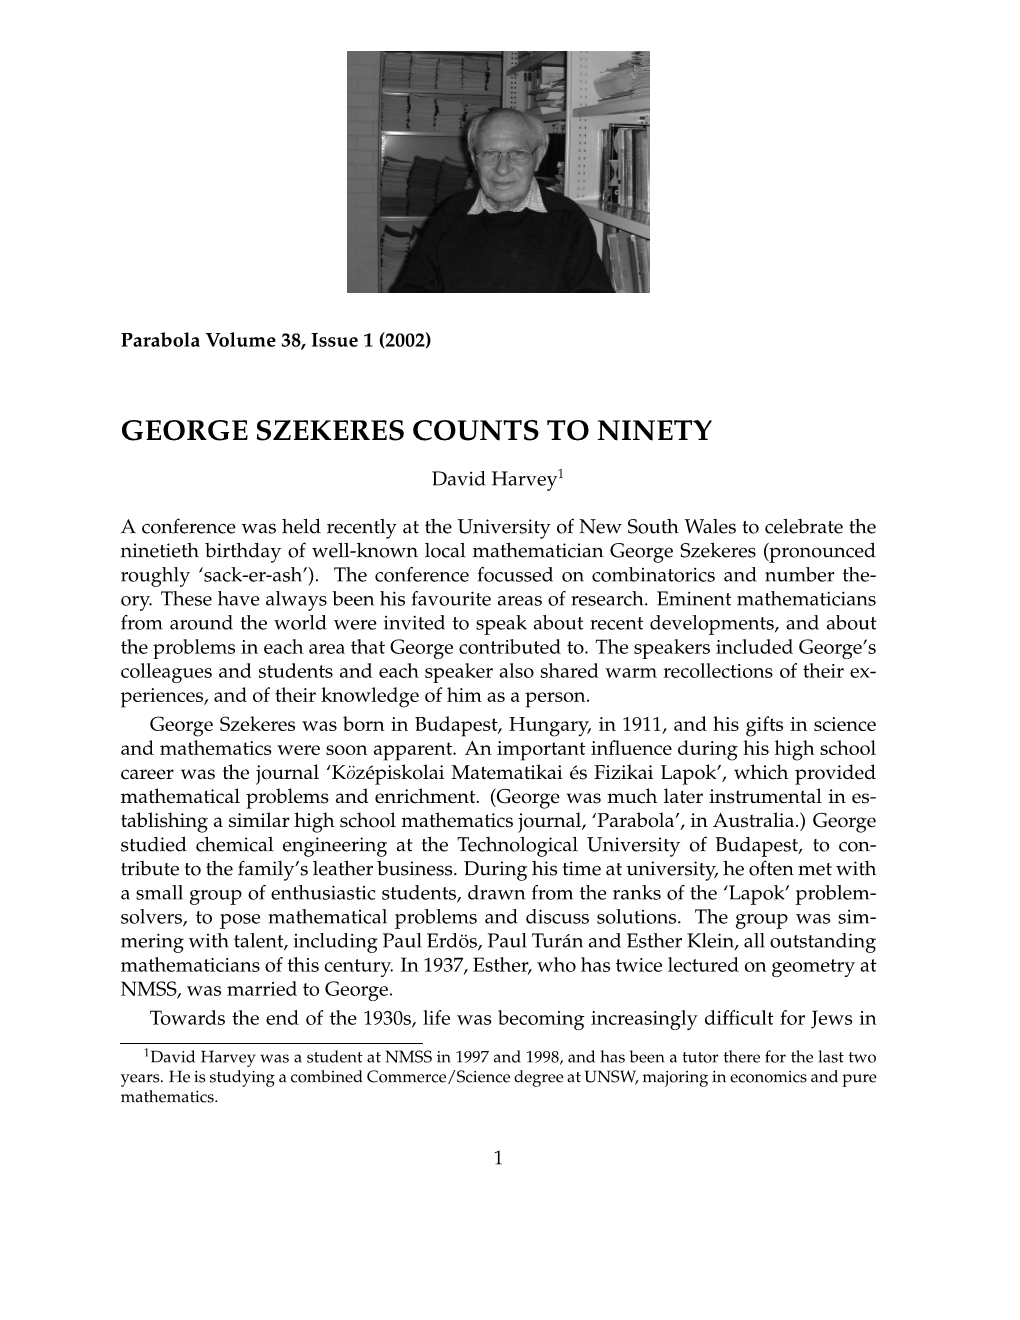 George Szekeres Counts to Ninety